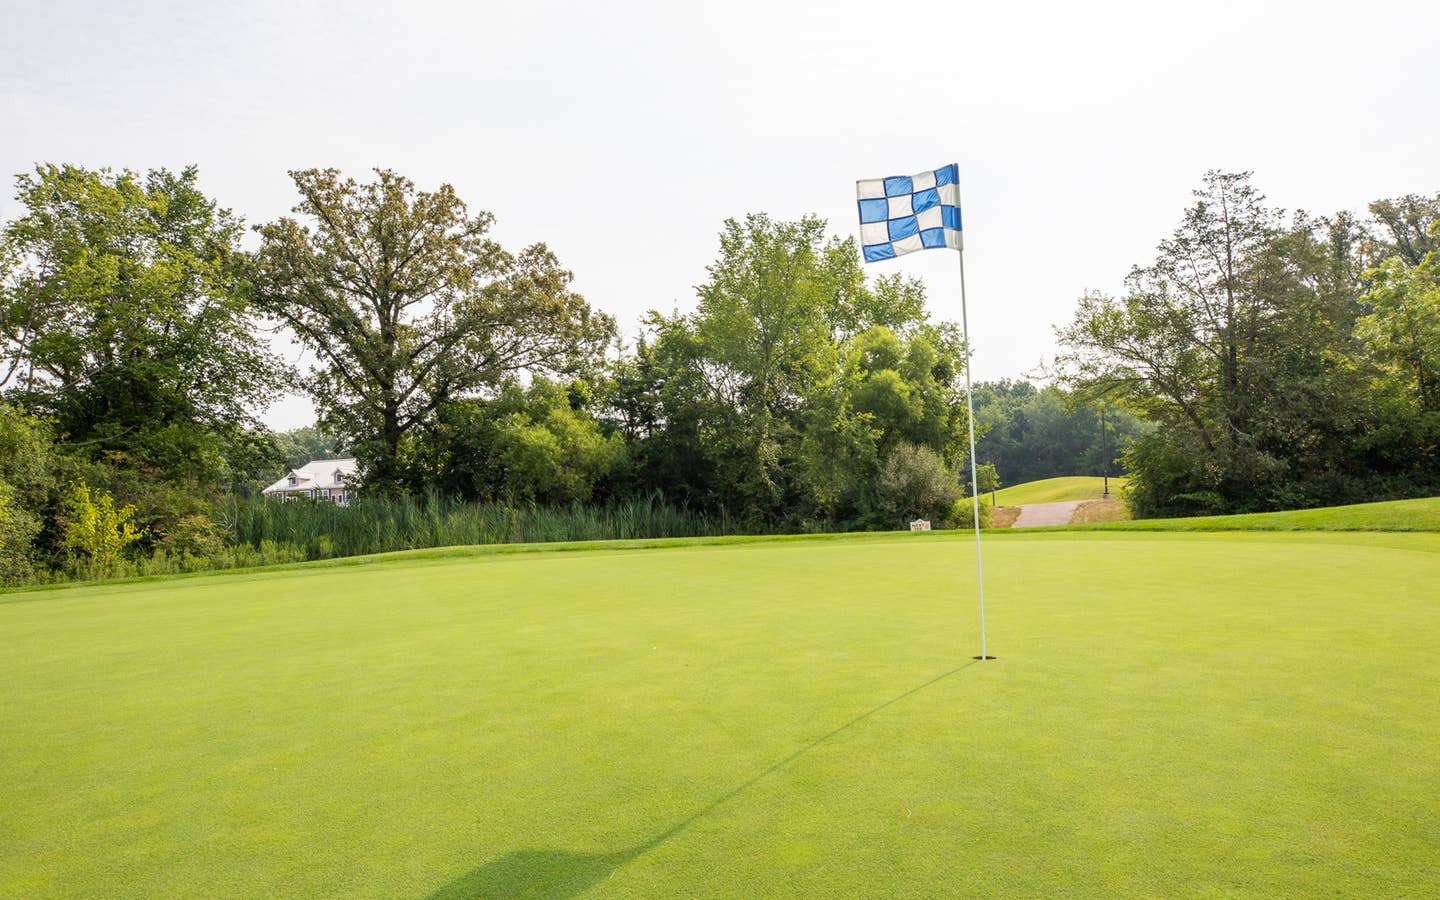 Golf course at Fox River Resort in Sheridan, Illinois.